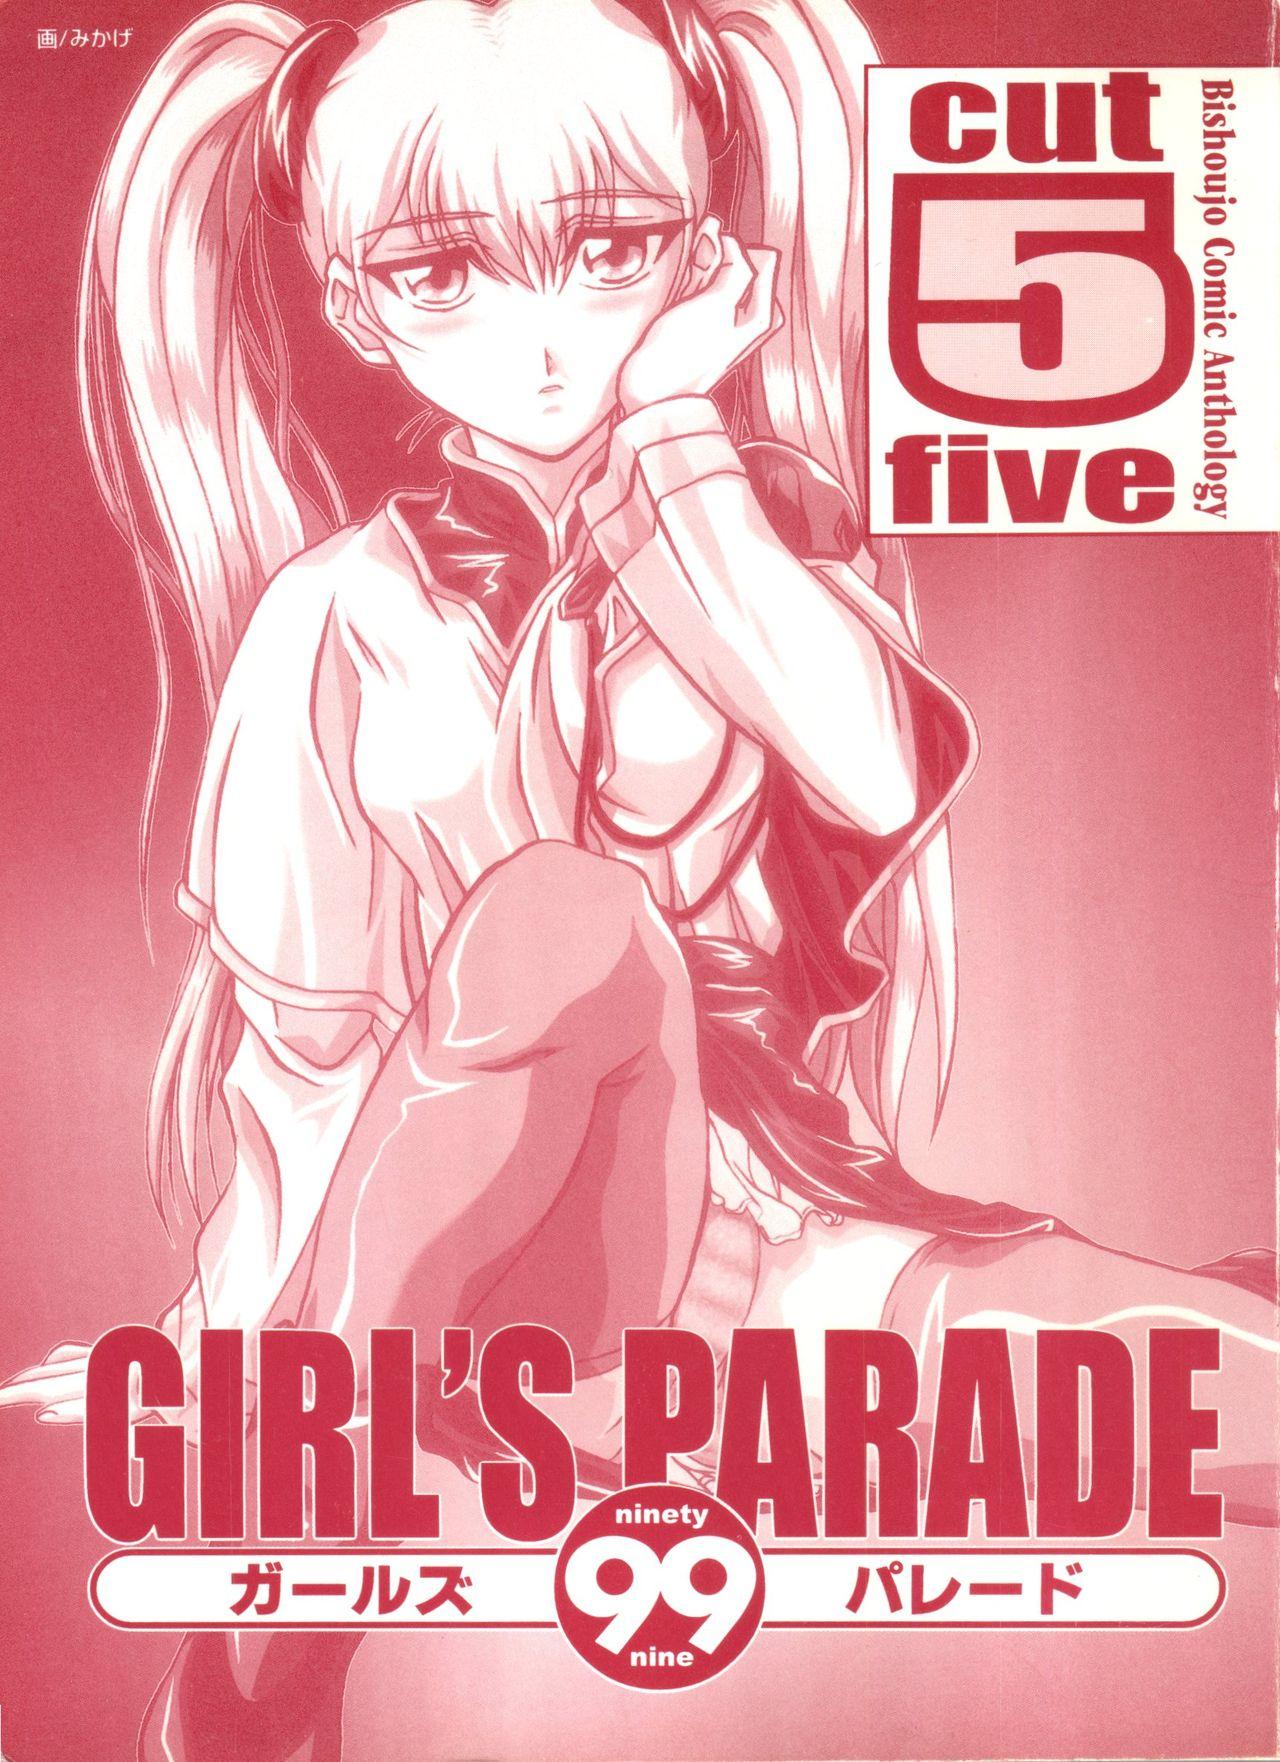 Girl's Parade 99 Cut 5 1